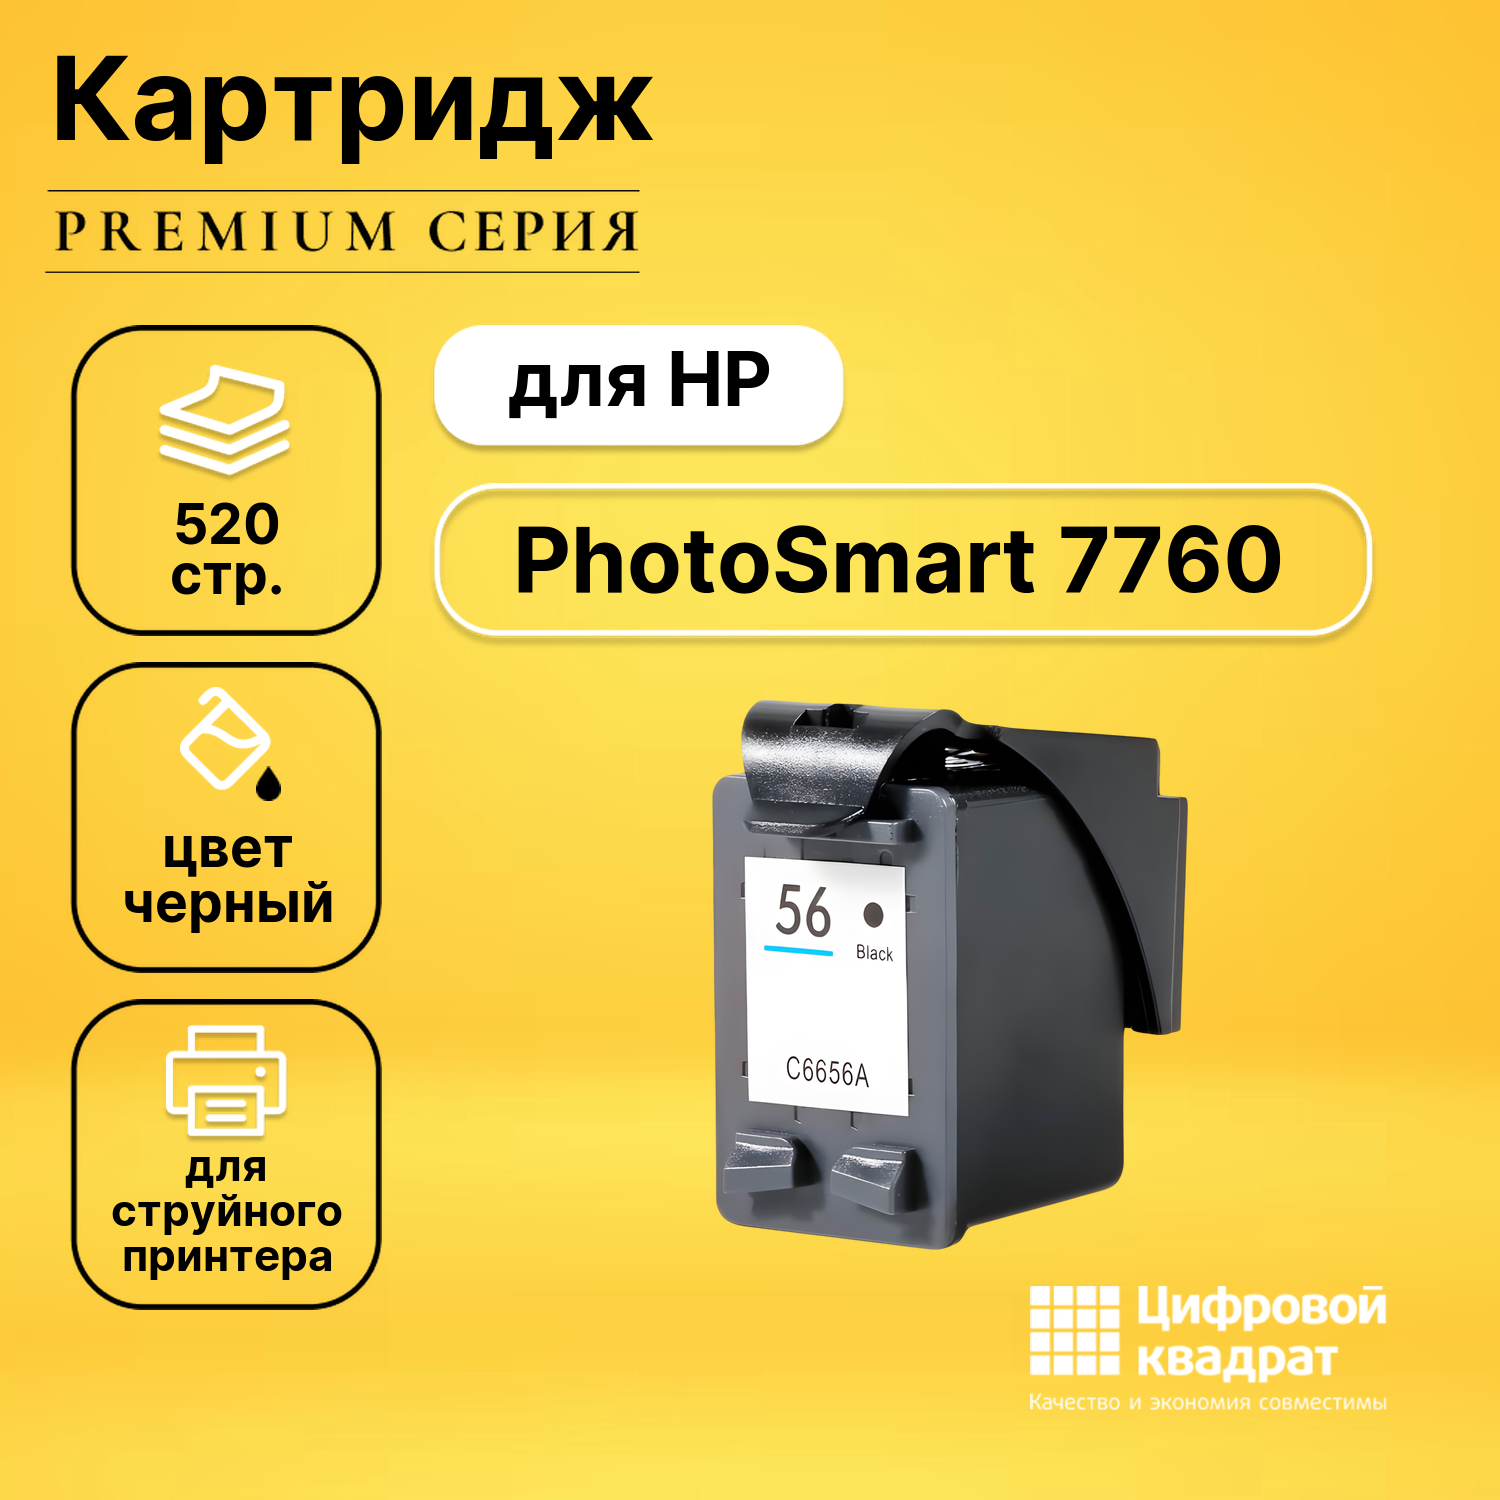 Картридж DS для HP PhotoSmart 7760 совместимый